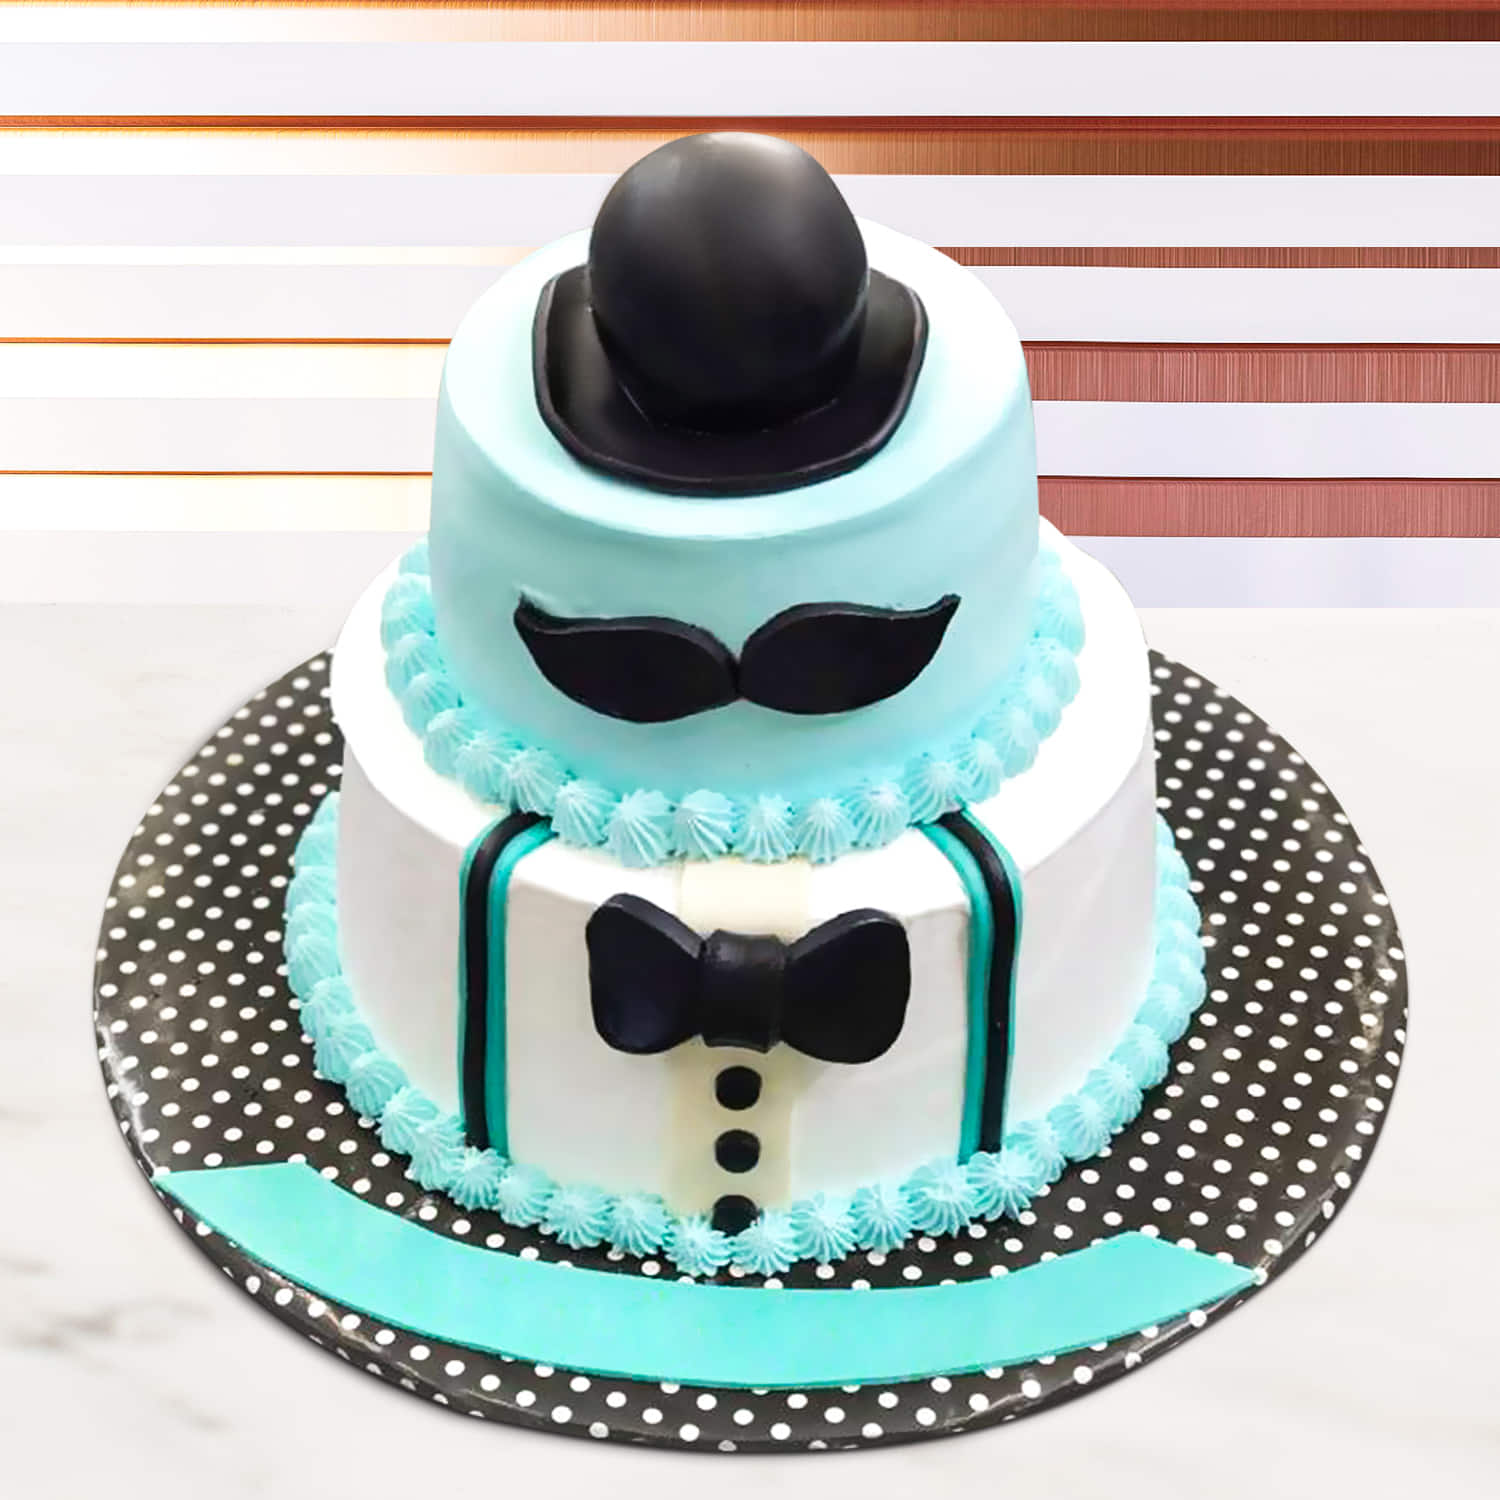 Elegant Dessert Corner - HUGO BOSS Birthday cake for the Birthday Boy  #photooftheday #hugoboss #boss #freshfruits #edible #photooftheday  #like4likes #oxfordbaker #homemade #freshfood #foodpornshare inspired by  #cakepearls | Facebook